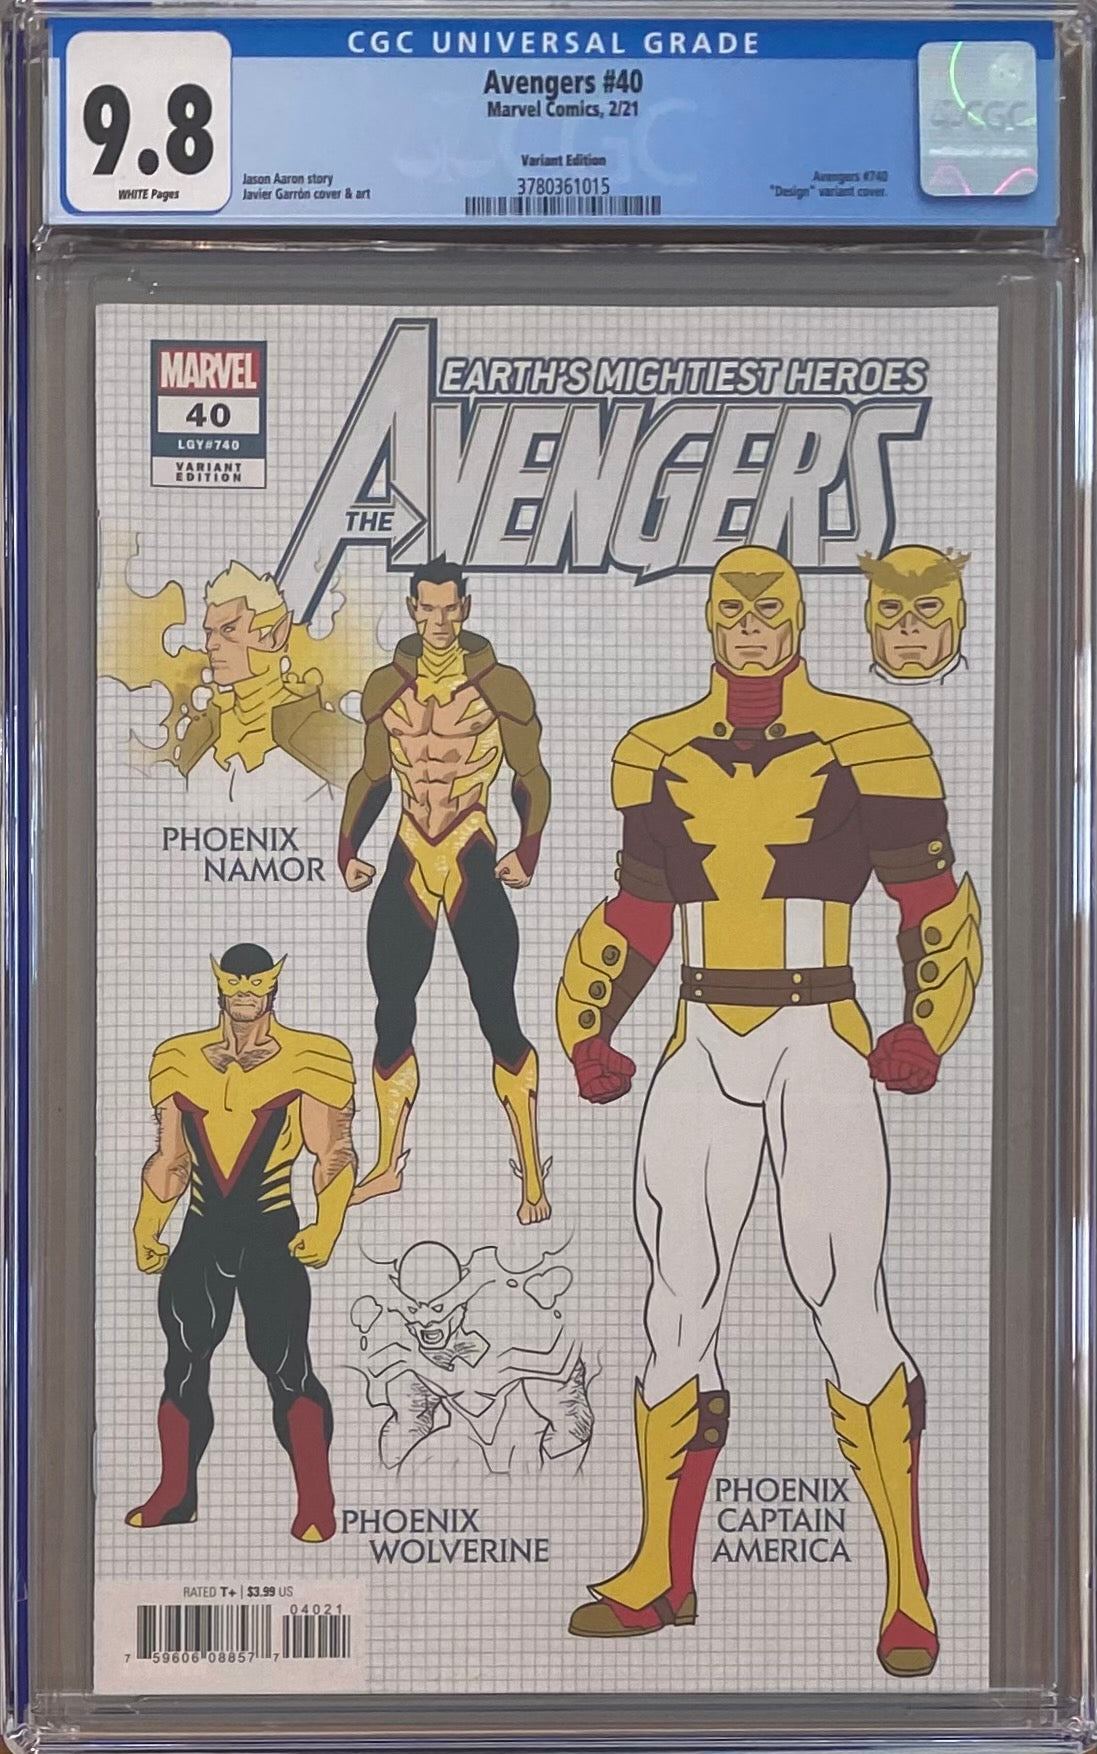 Avengers #40 "Design" Variant CGC 9.8